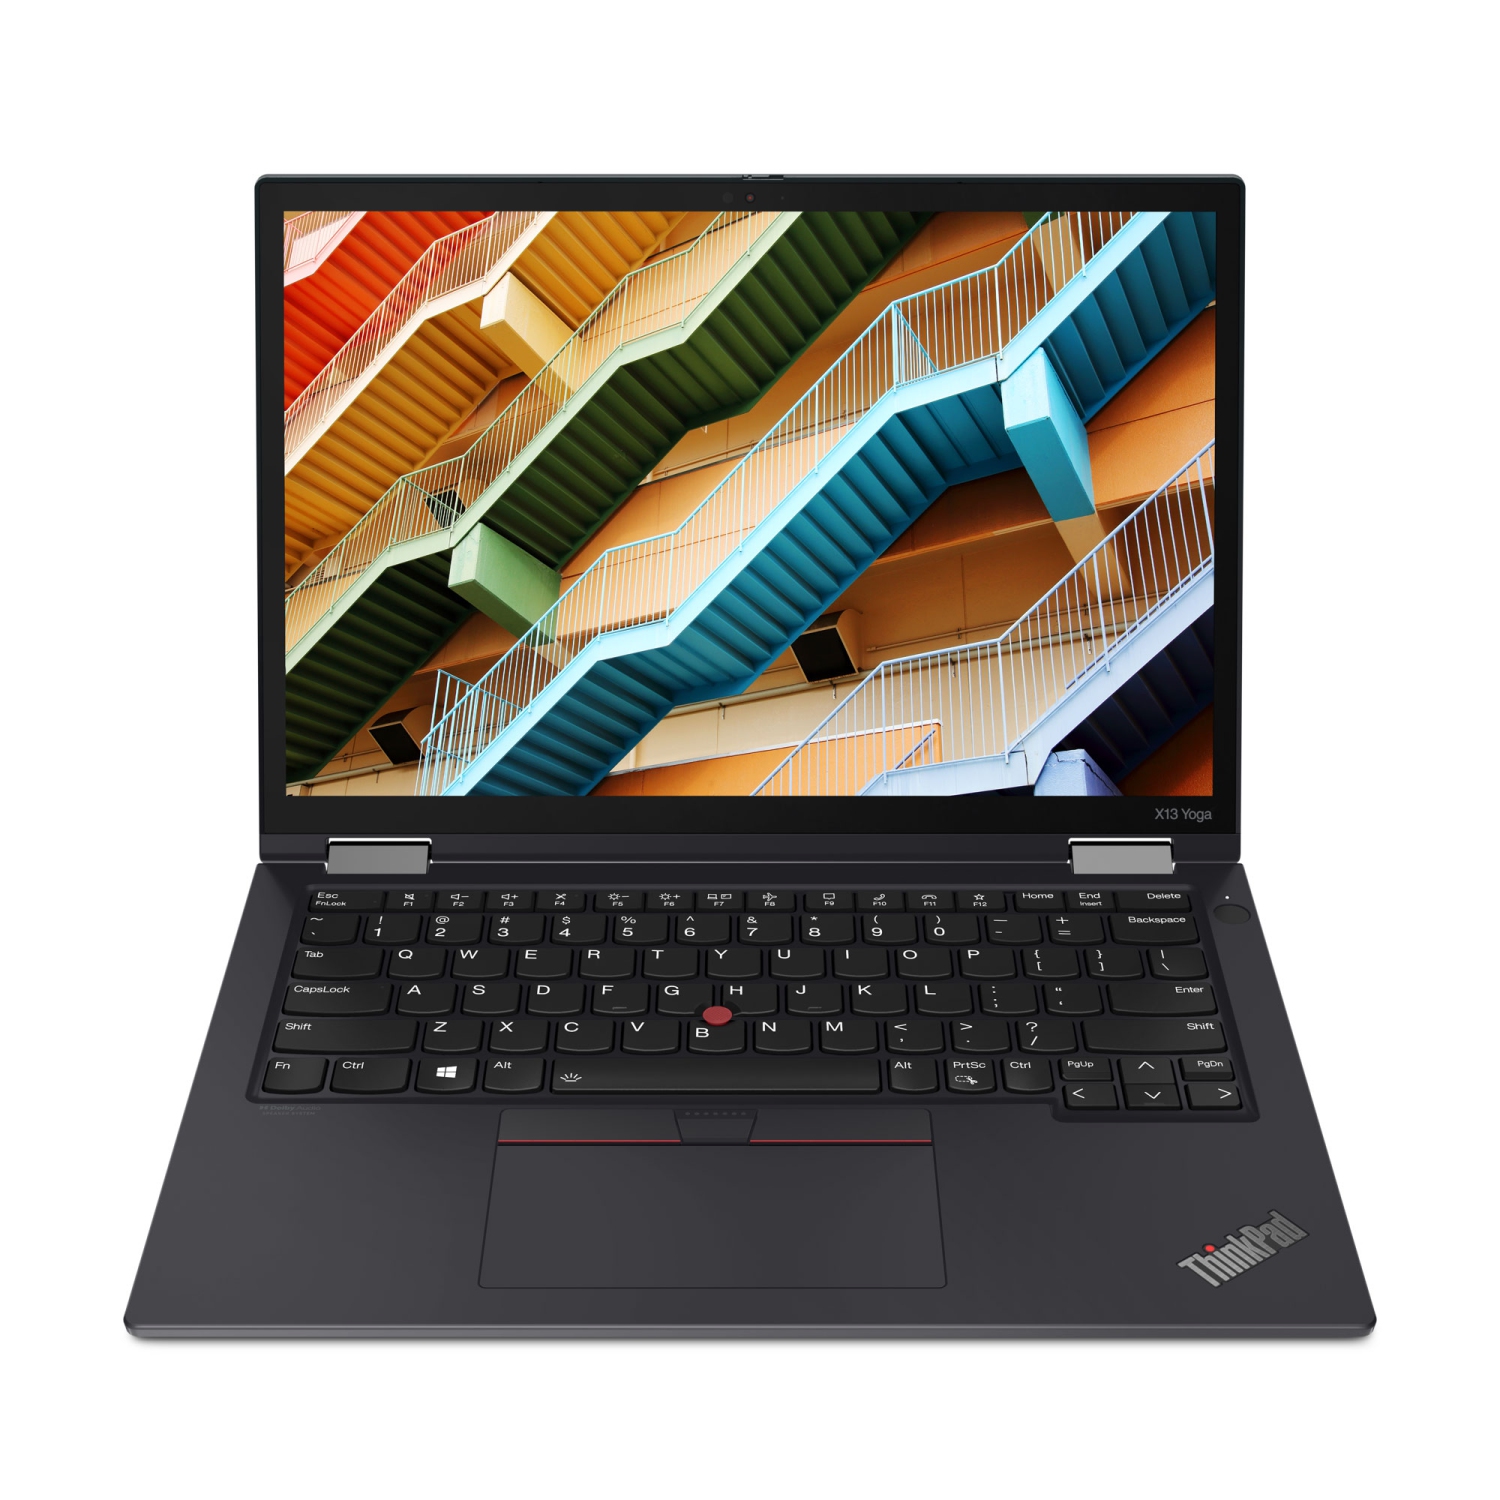 Lenovo ThinkPad X13 Yoga Gen 2 Intel Laptop, 13.3" IPS Touch 300 nits, i5-1135G7, Iris Xe Graphics, 8GB, 256GB SSD